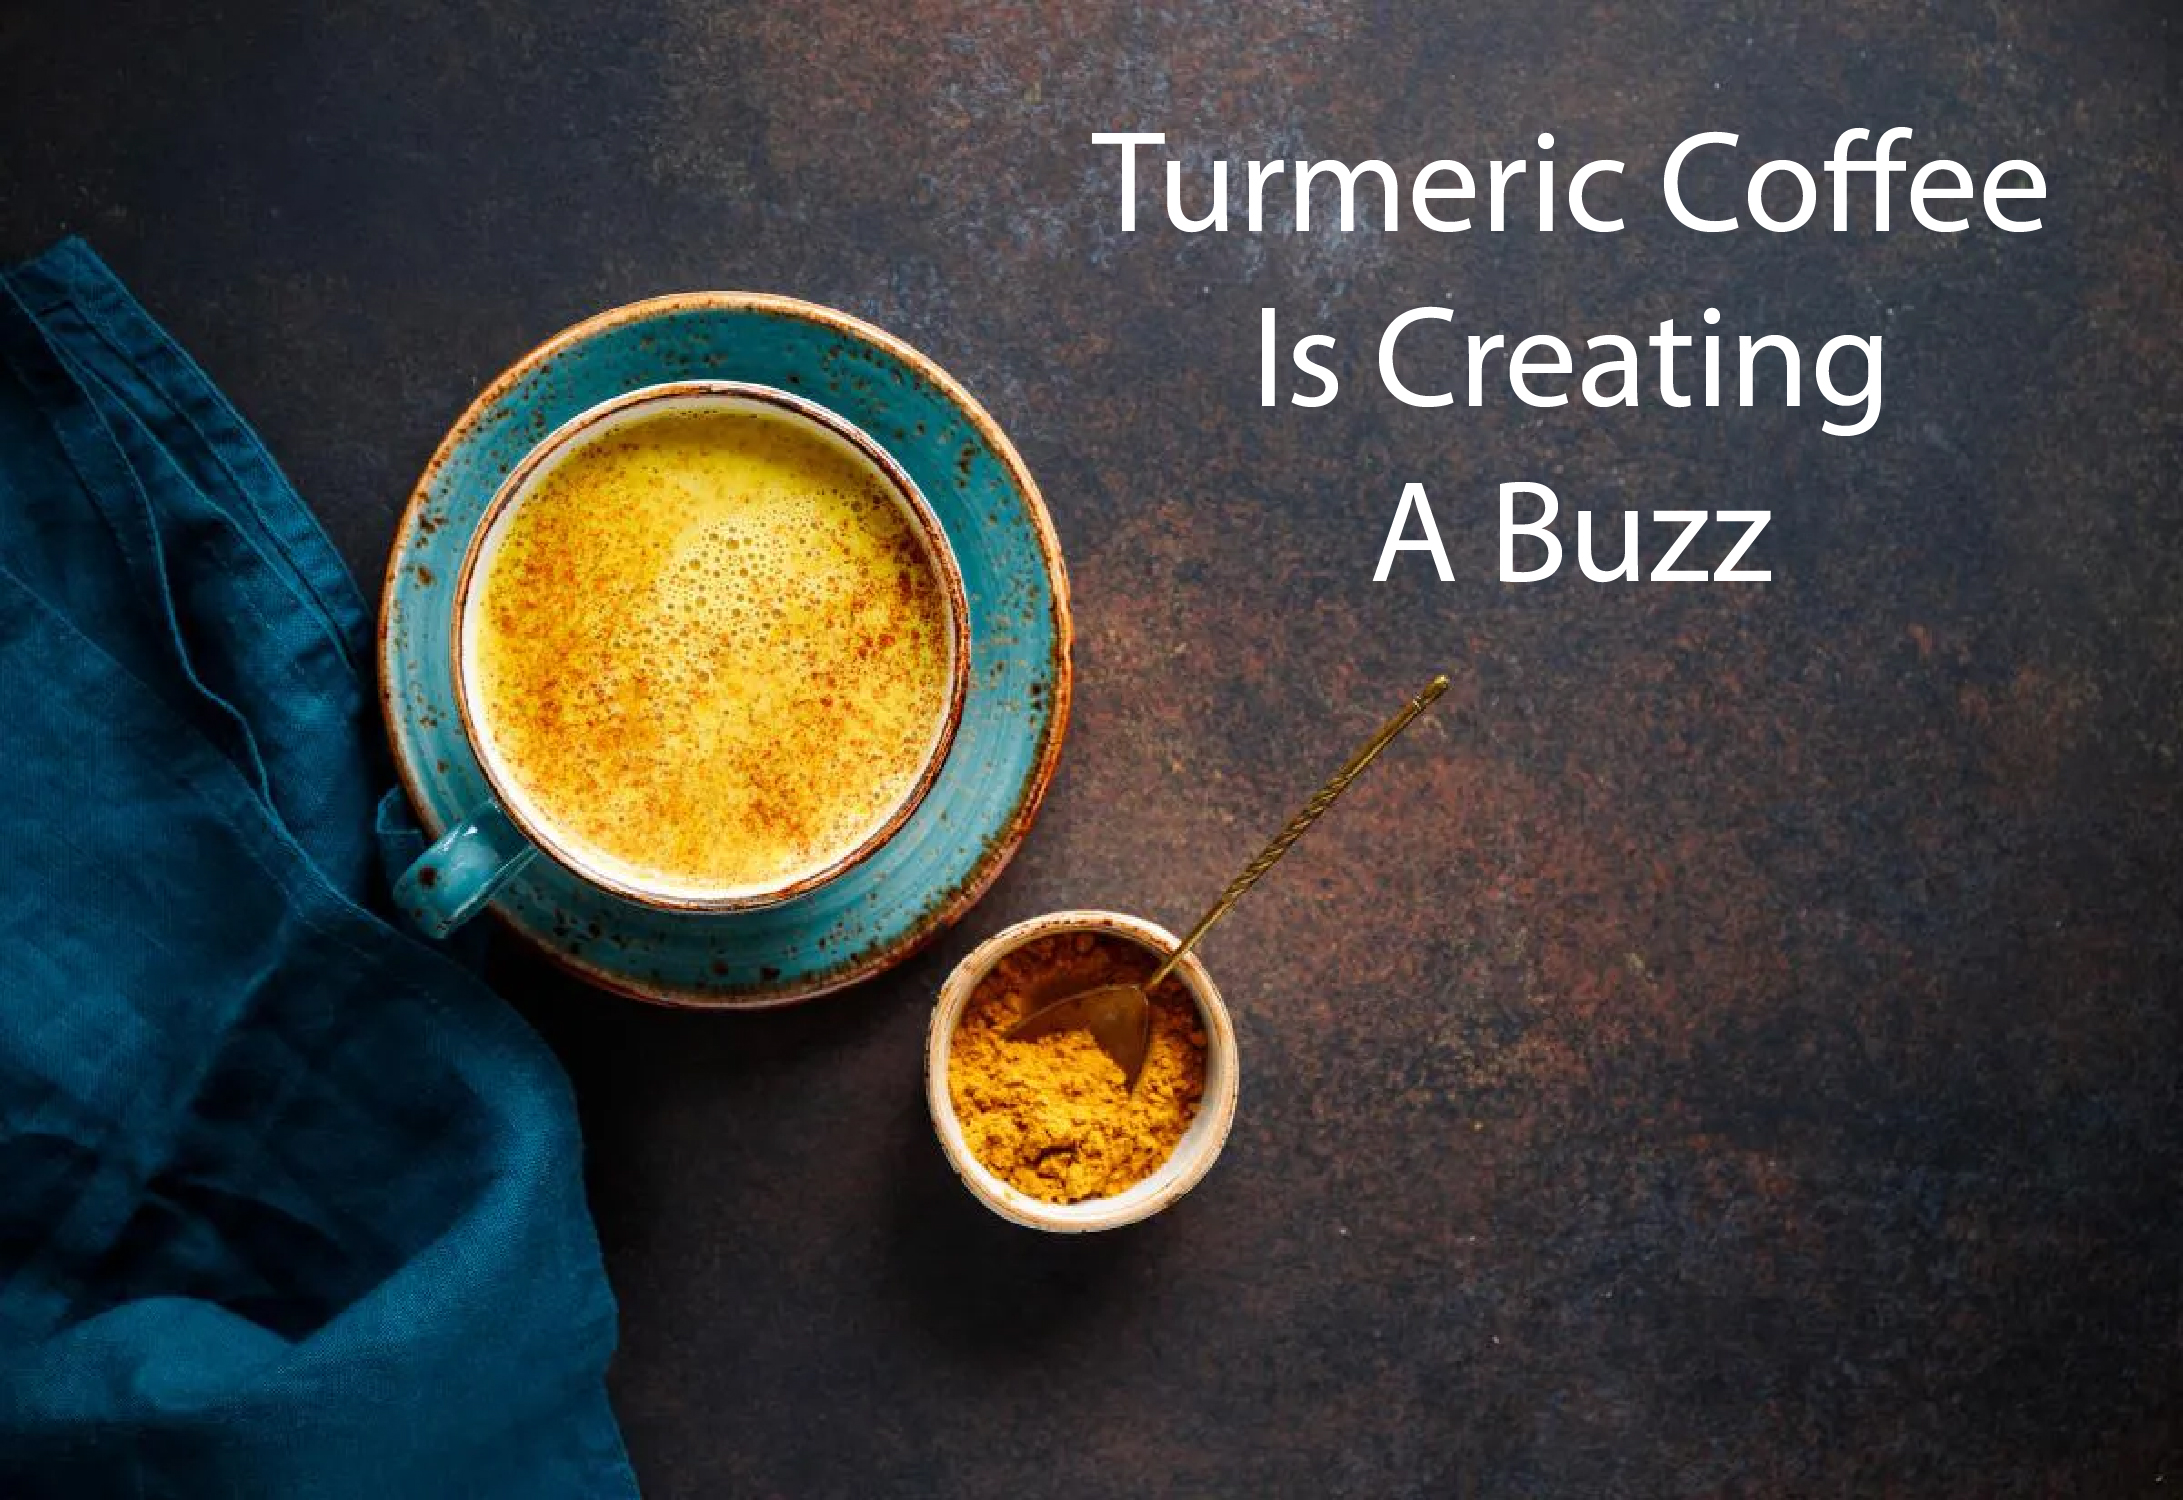 Turmeric Coffee Is Creating a Buzz